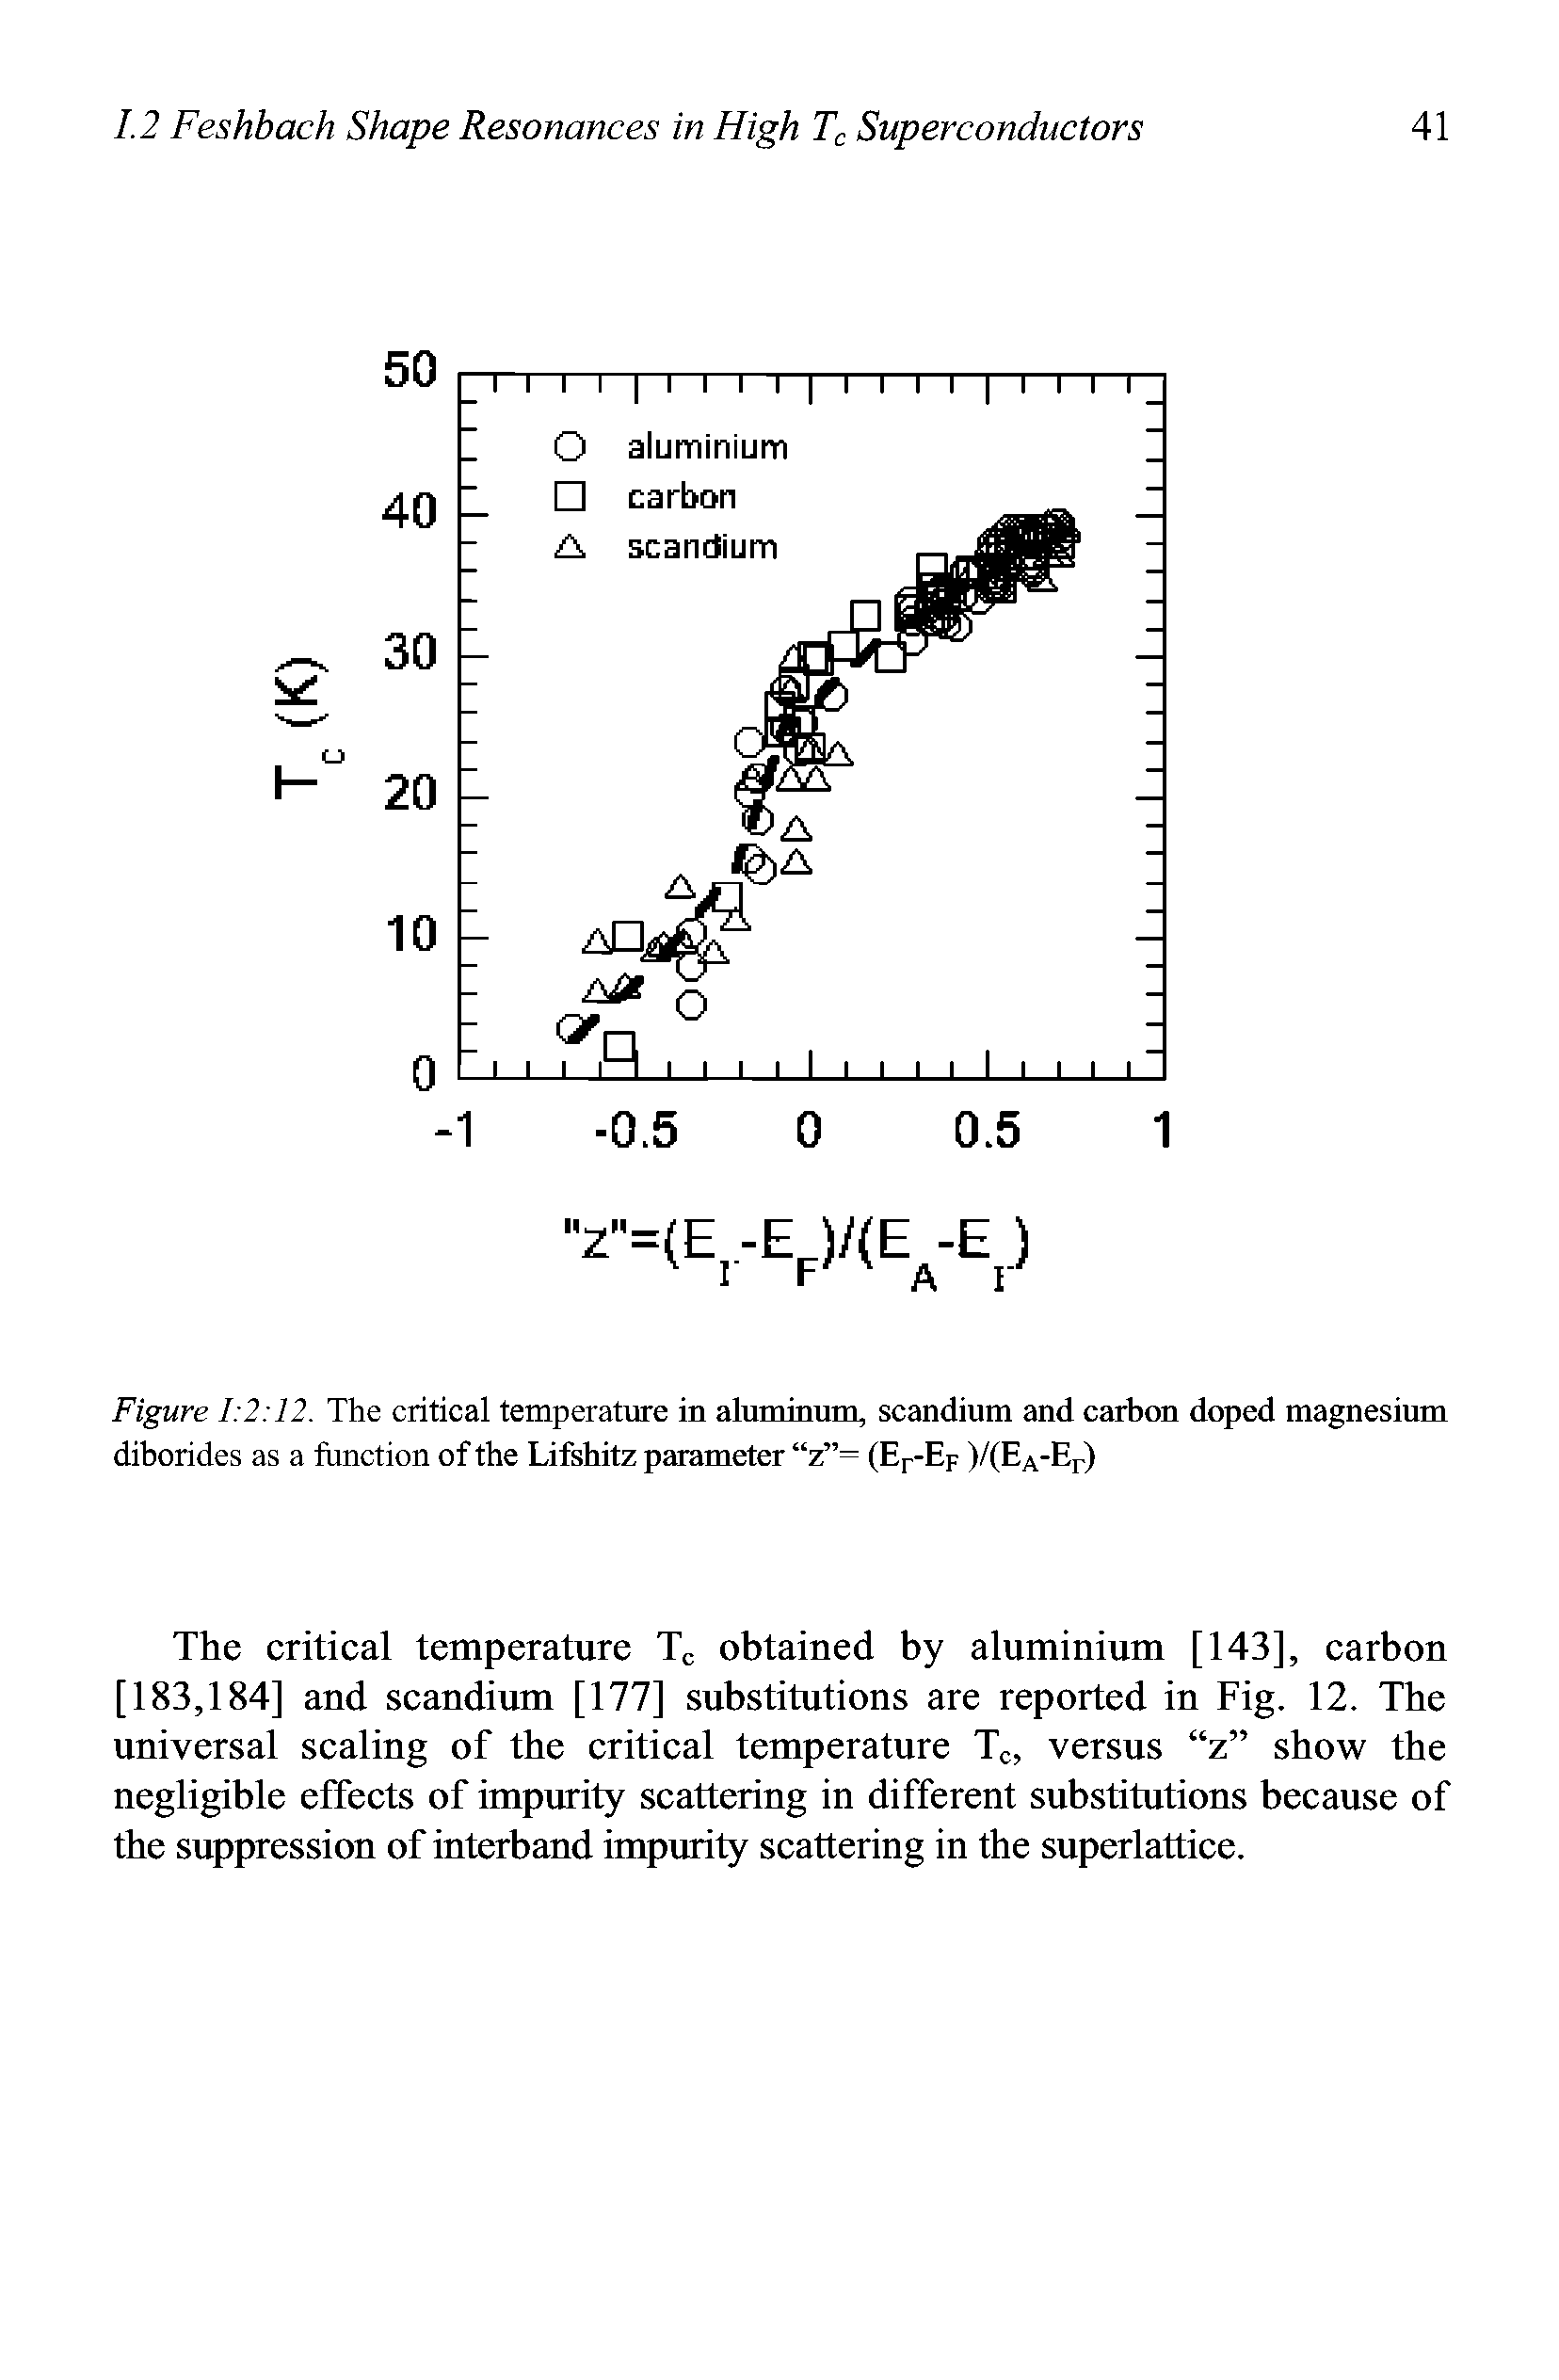 Figure 1 2 12. The critical temperature in aluminum, scandium and carbon doped magnesium diborides as a function of the Lifshitz parameter z = (Er-Ep )/(EA-Er)...